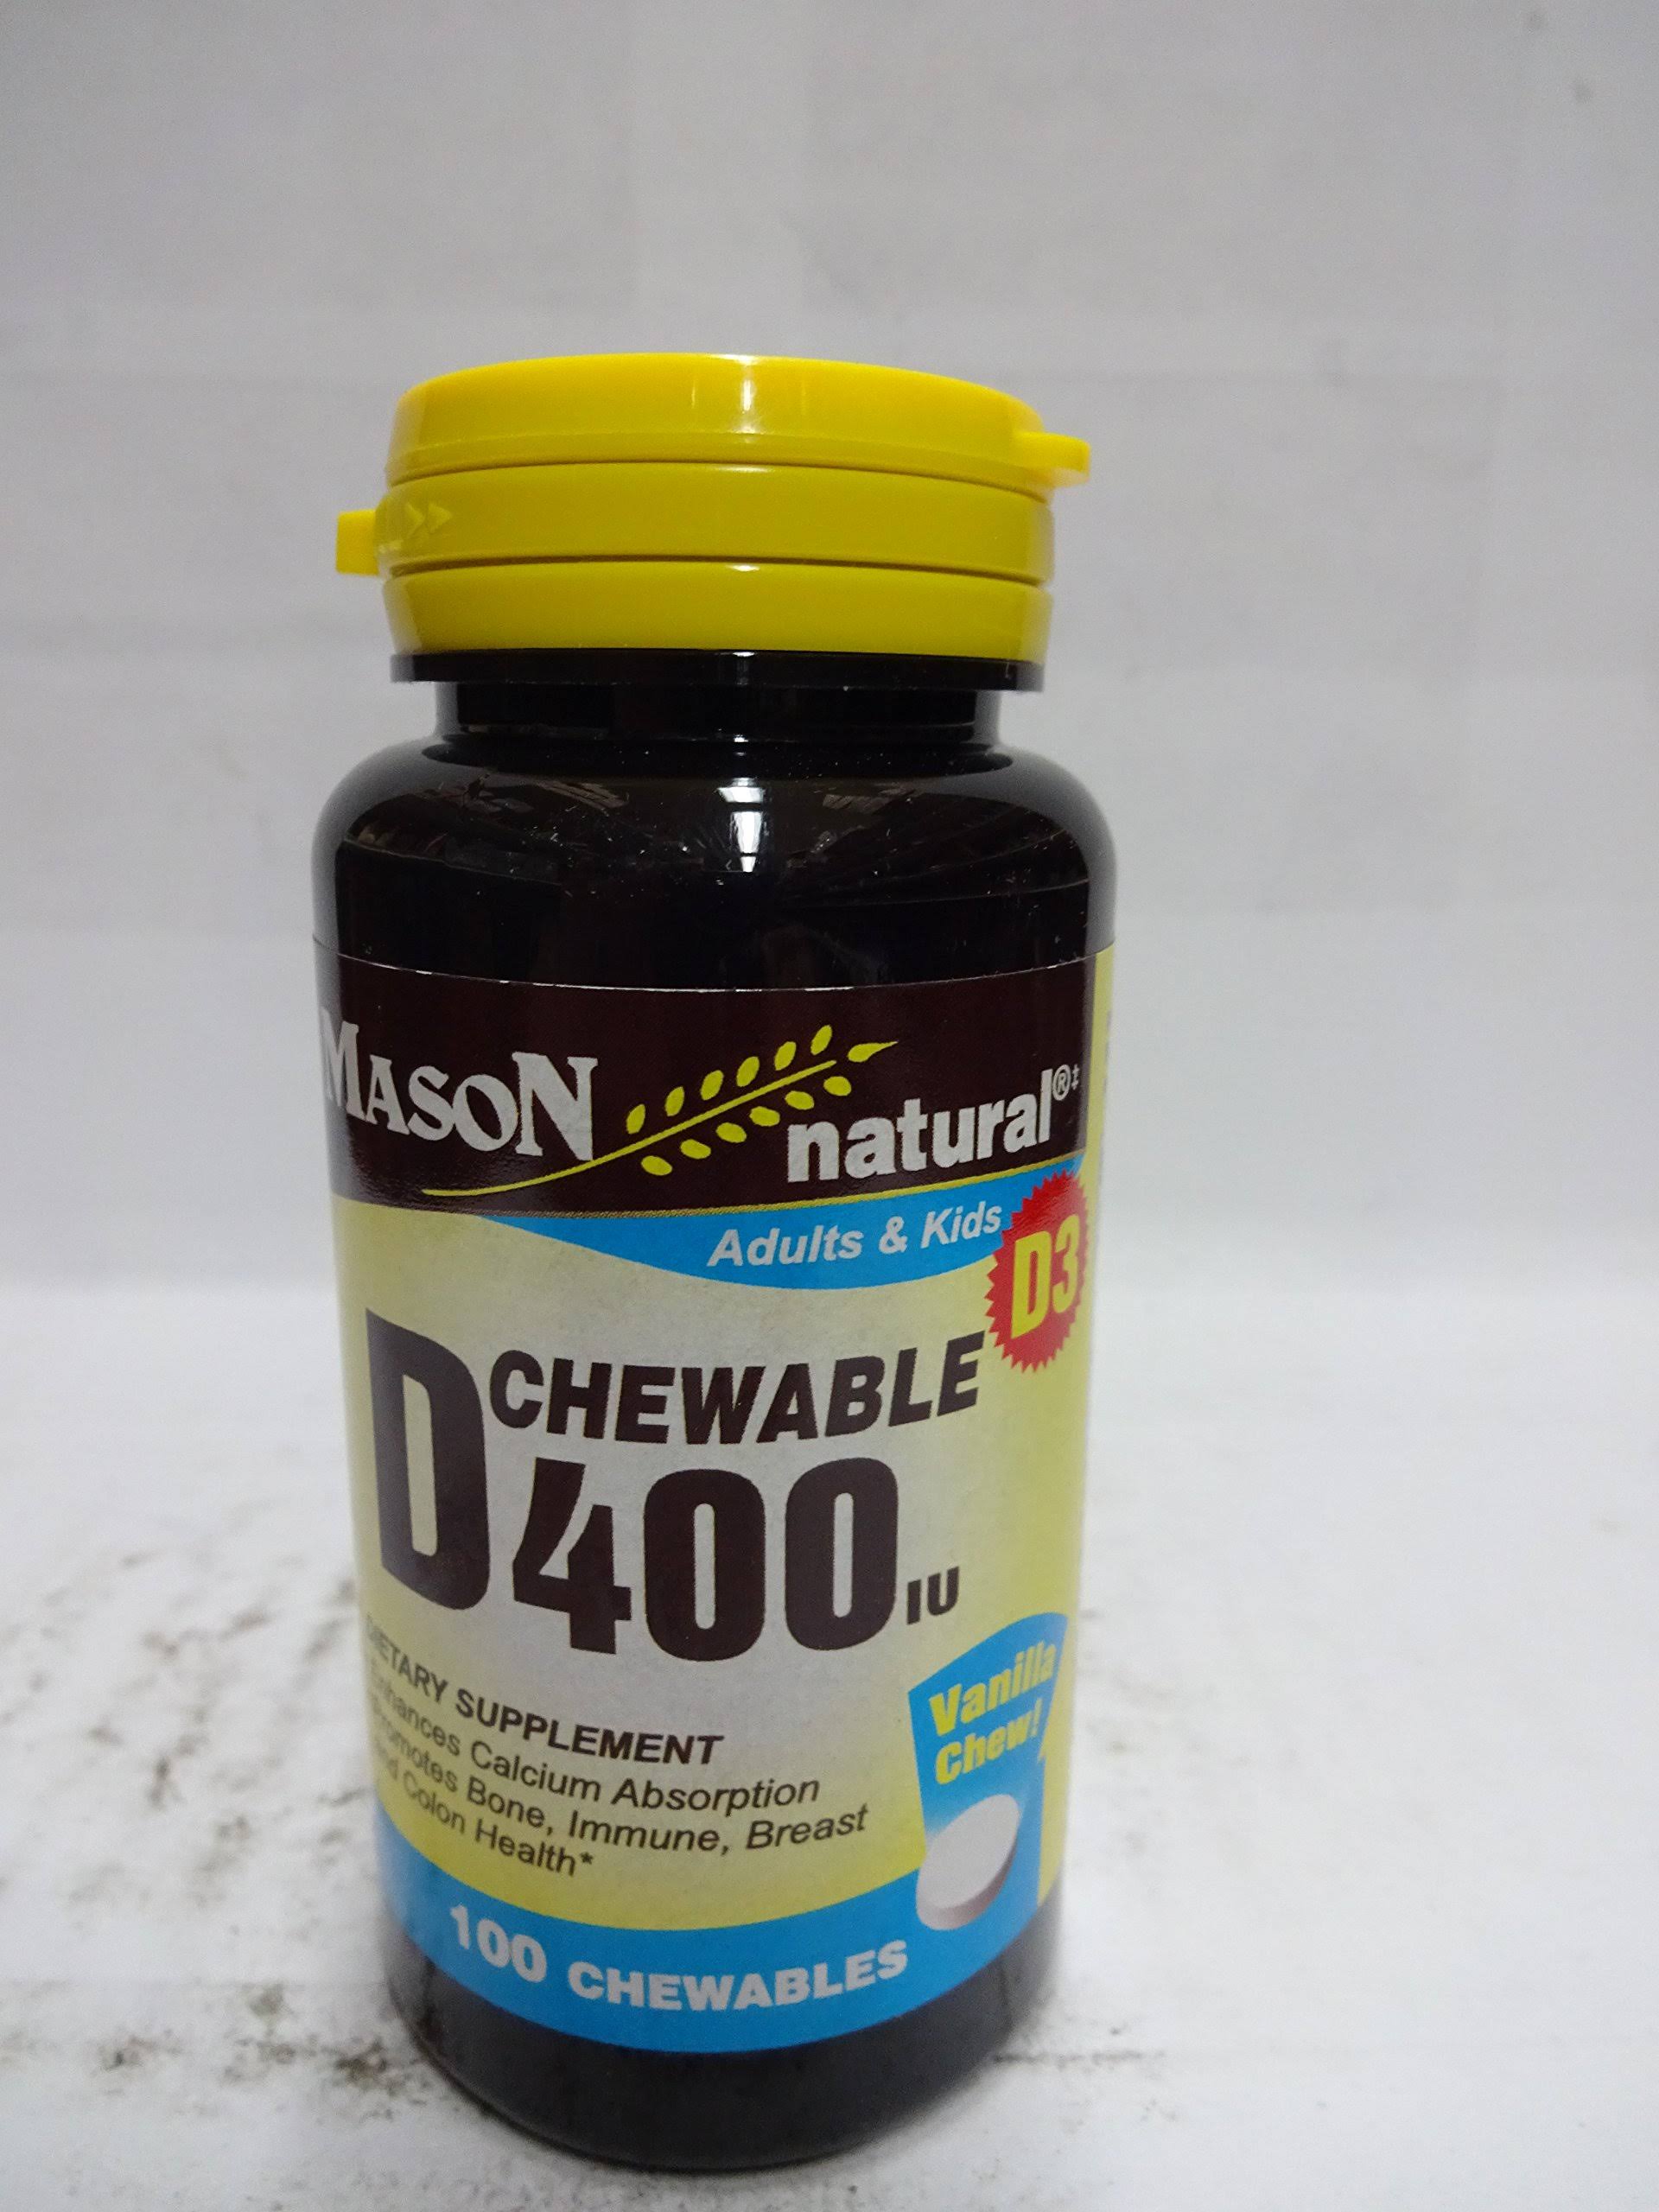 Mason Natural Vitamin D 400 IU Chewable Tablets - Vanilla Flavor